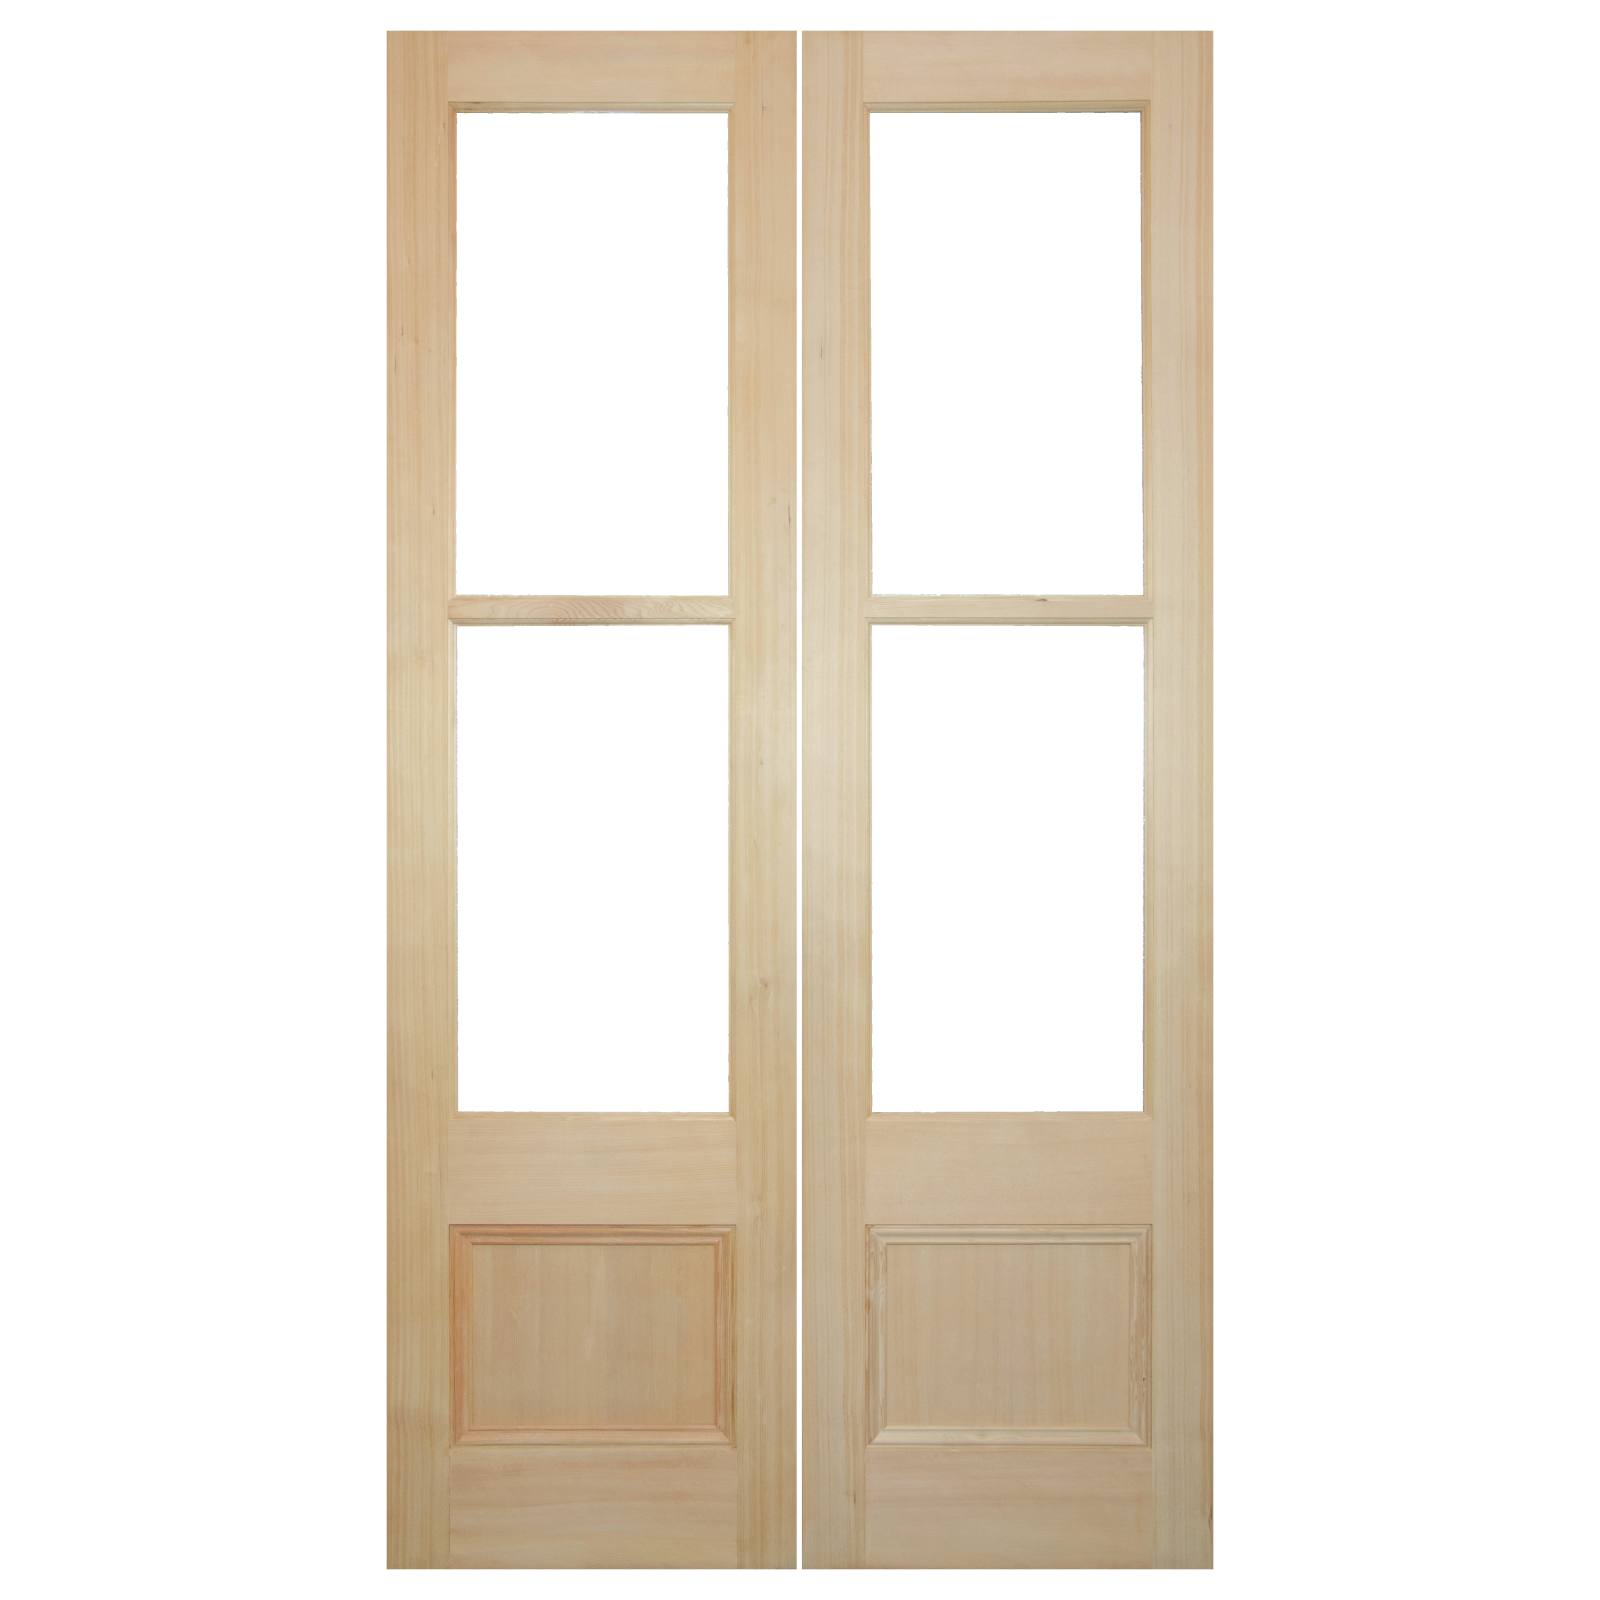 Pair of Tall Internal Glazed French 72cm Doors, Raw HV